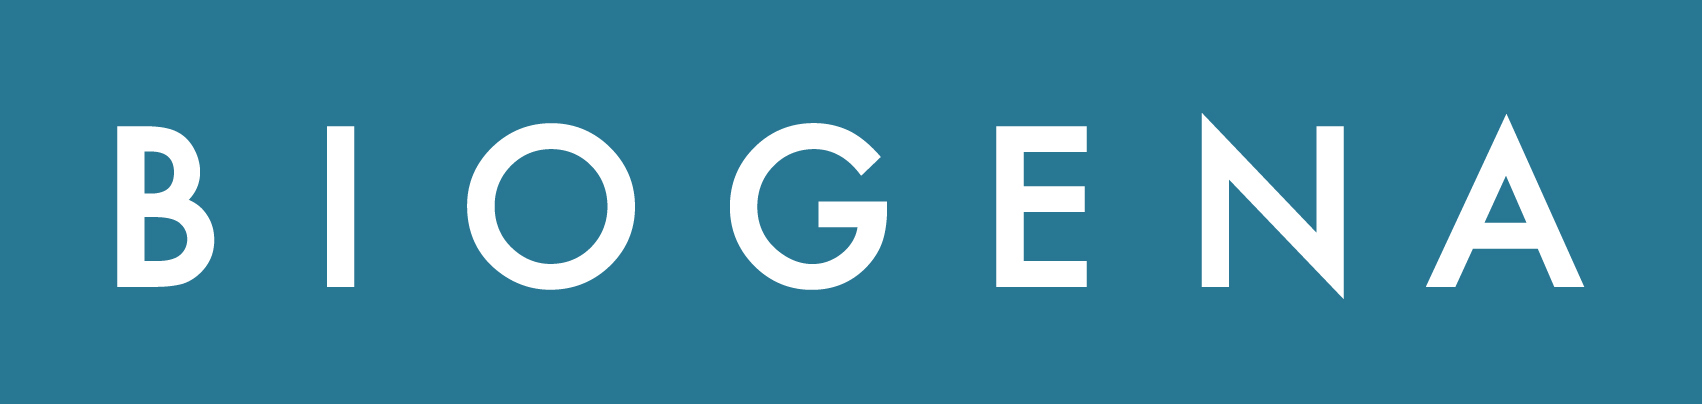 Biogena_Logotype